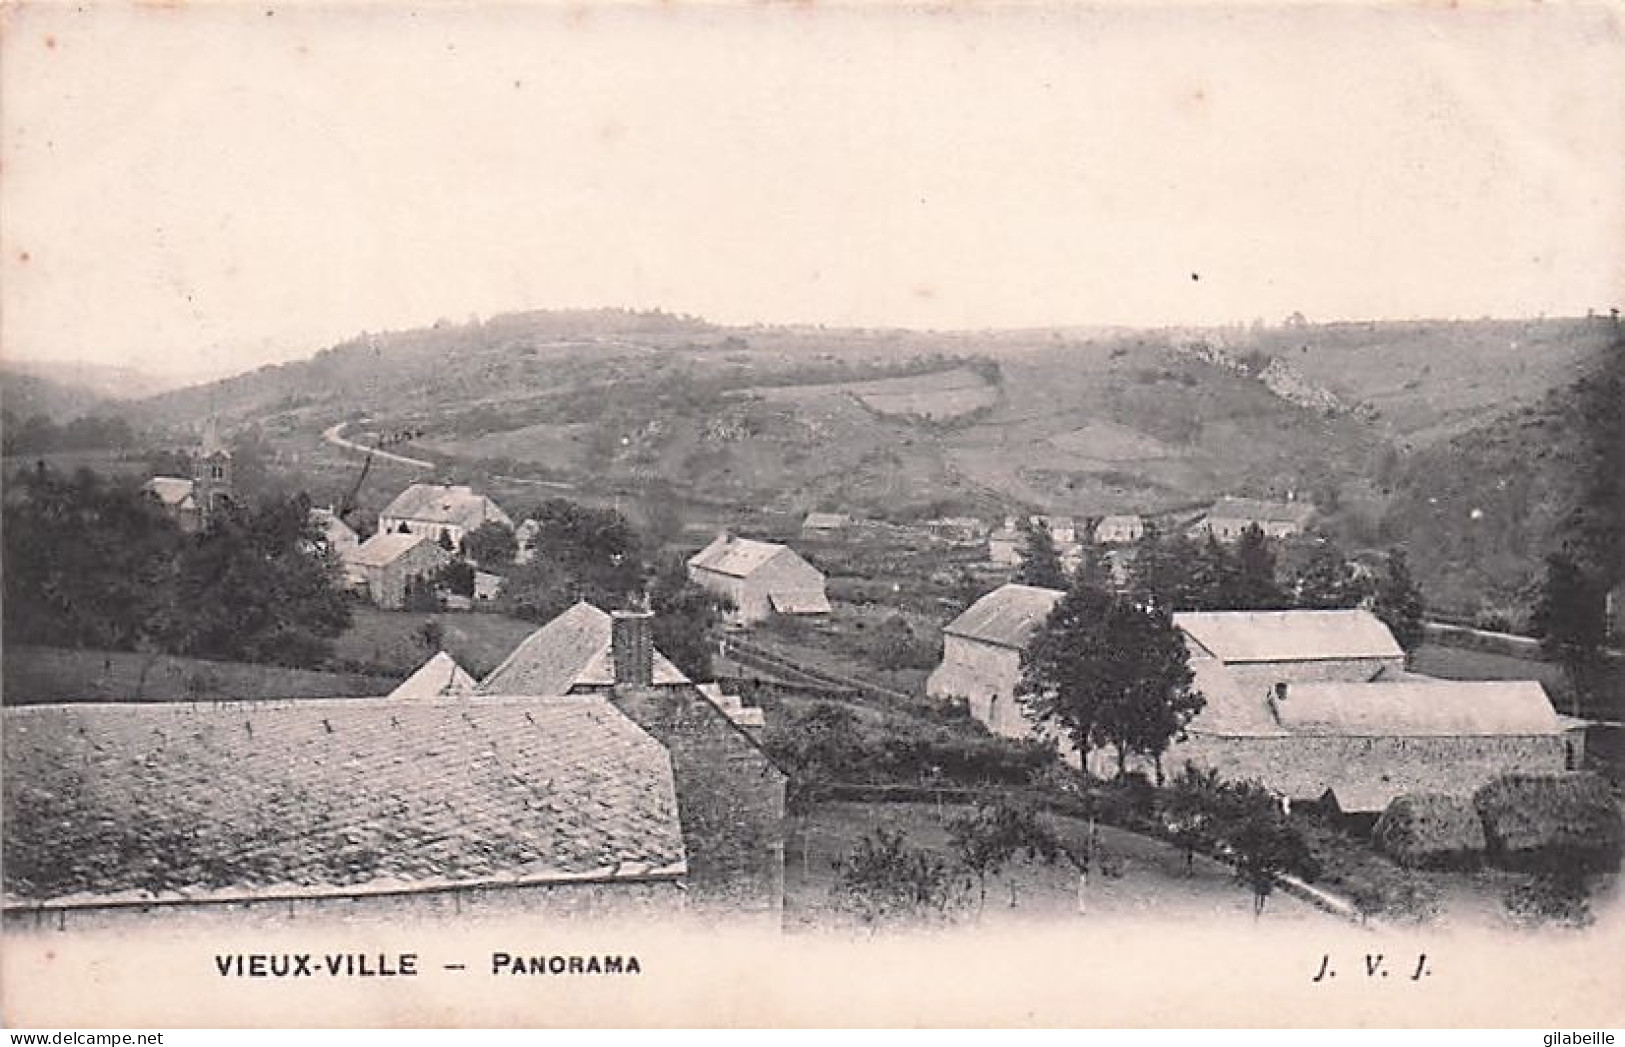 Ferrieres - VIEUXVILLE - VIEUX VILLE  - Panorama - 1907 - Ferrieres